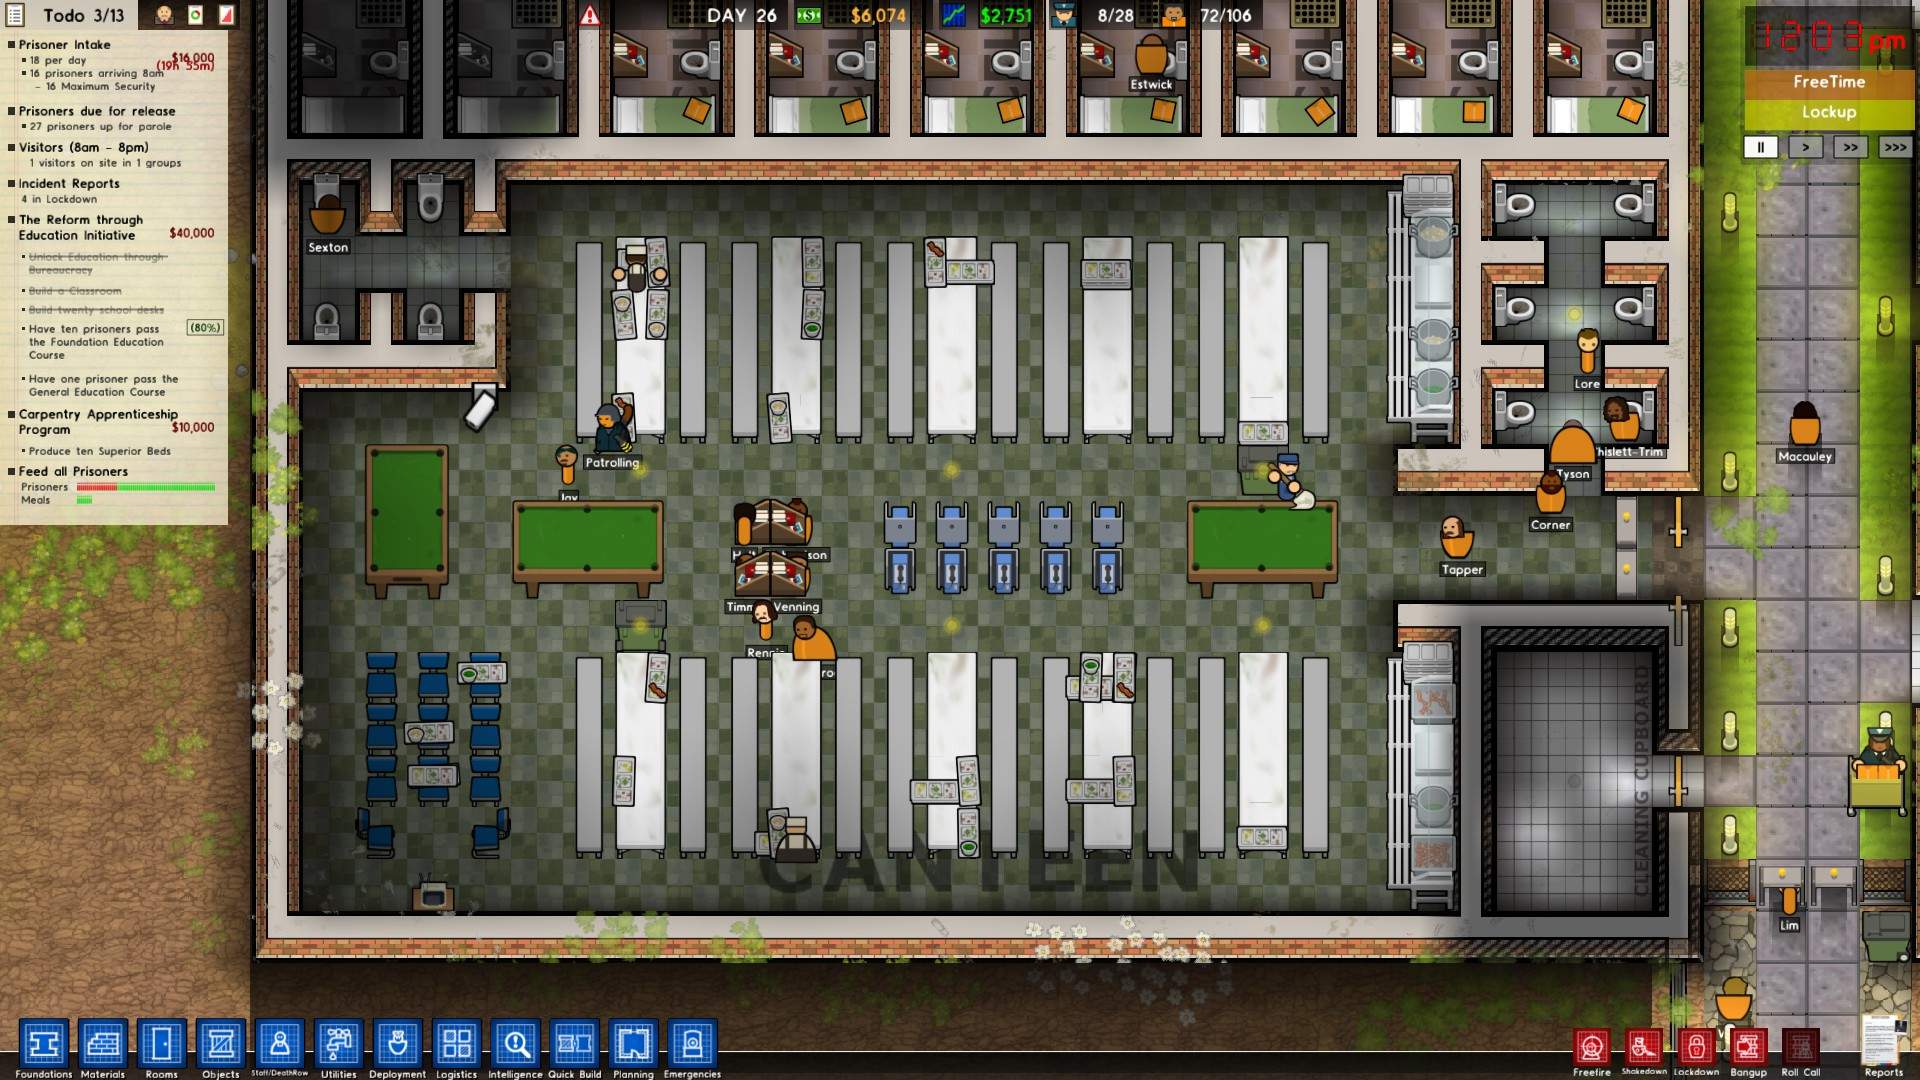 Tips on building a prison architect layout - rentsanta